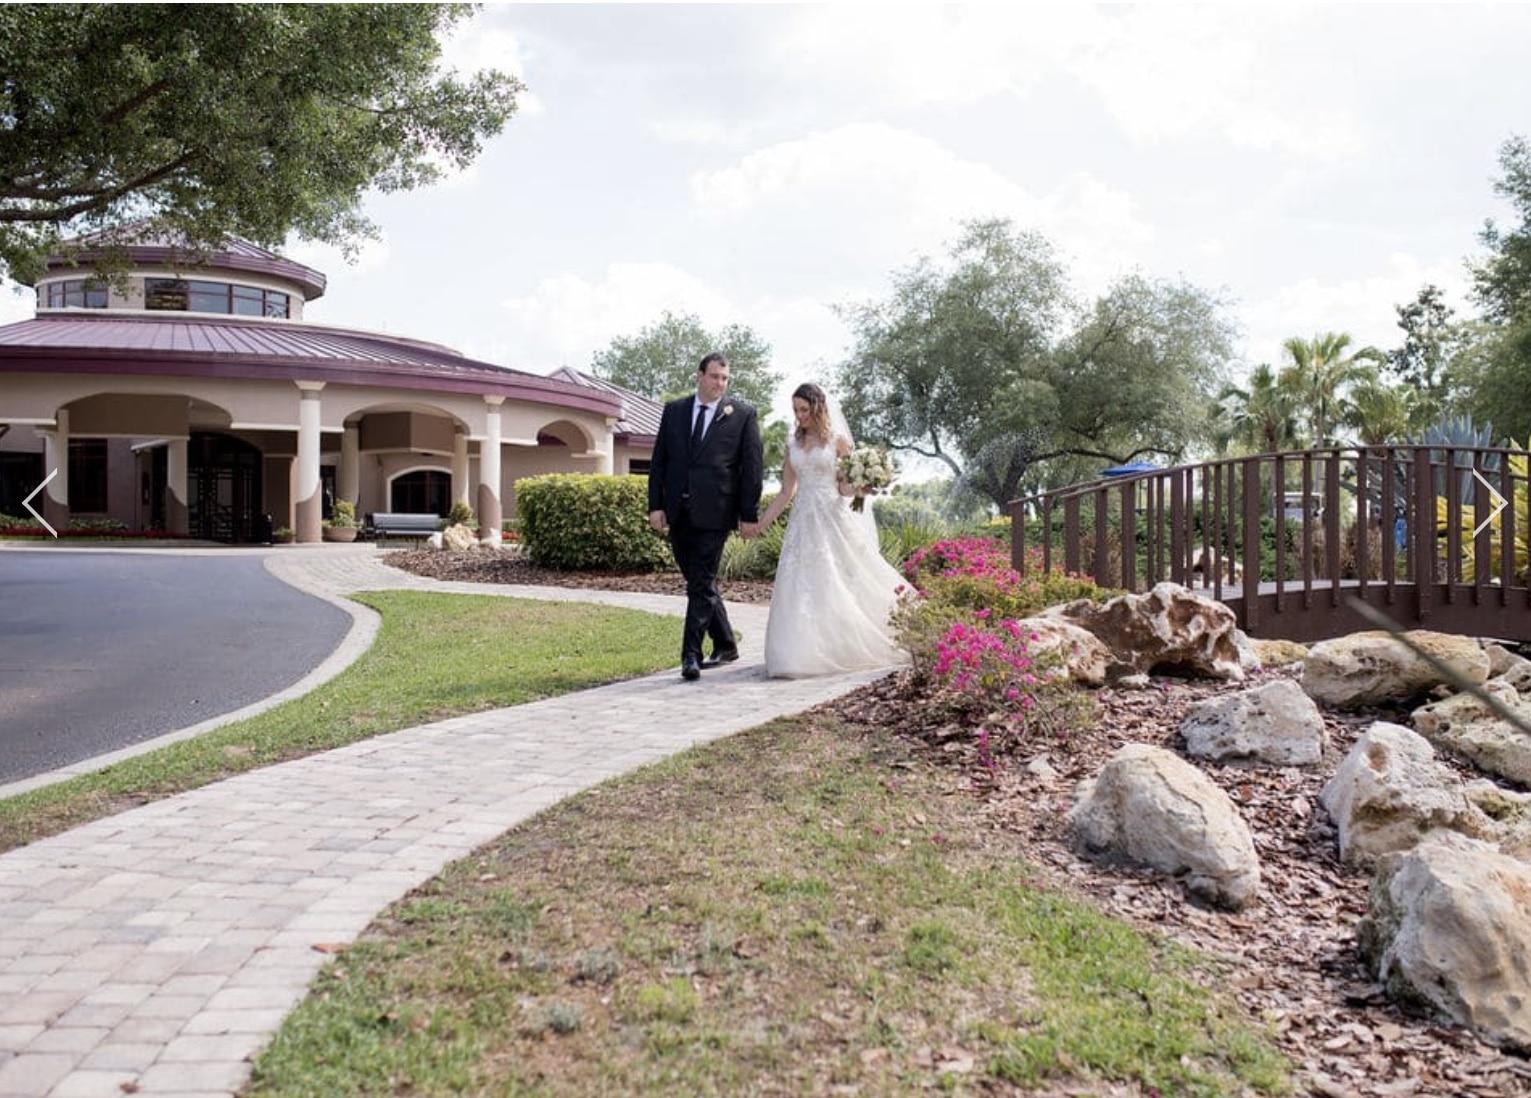 Wedding venues near Disney - Mystic Dunes Resort & Golf